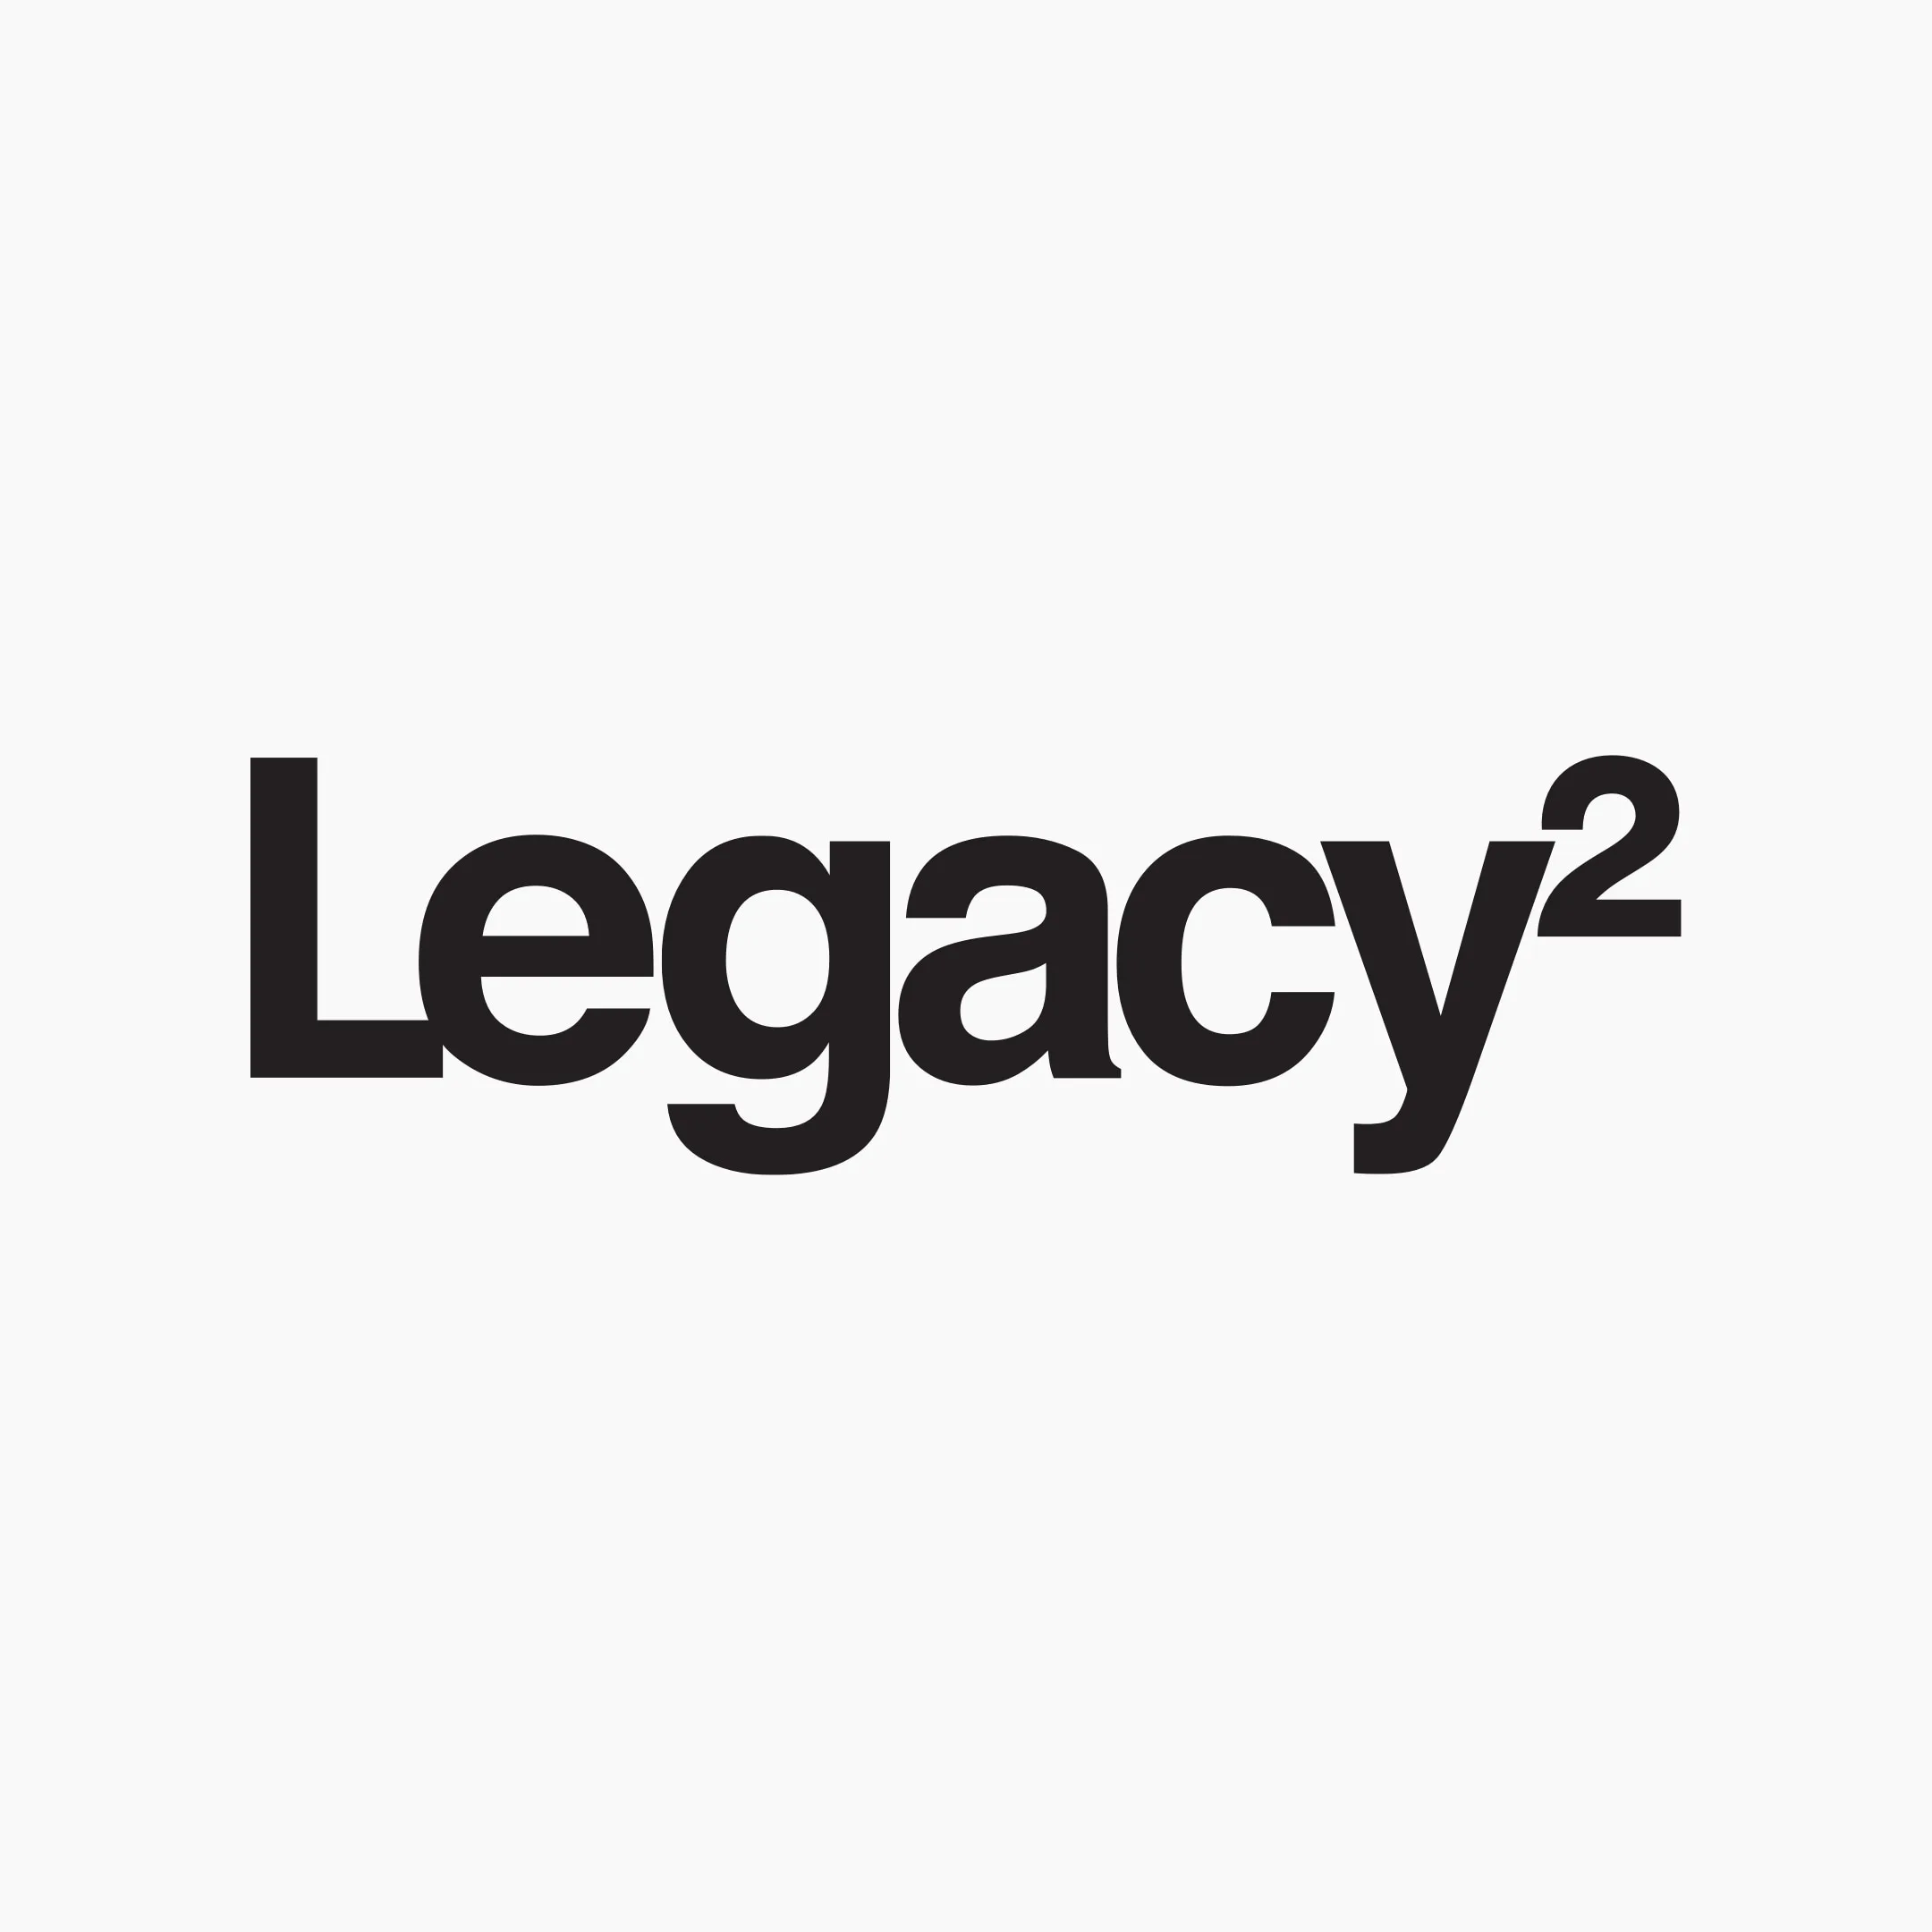 legacy2 logo